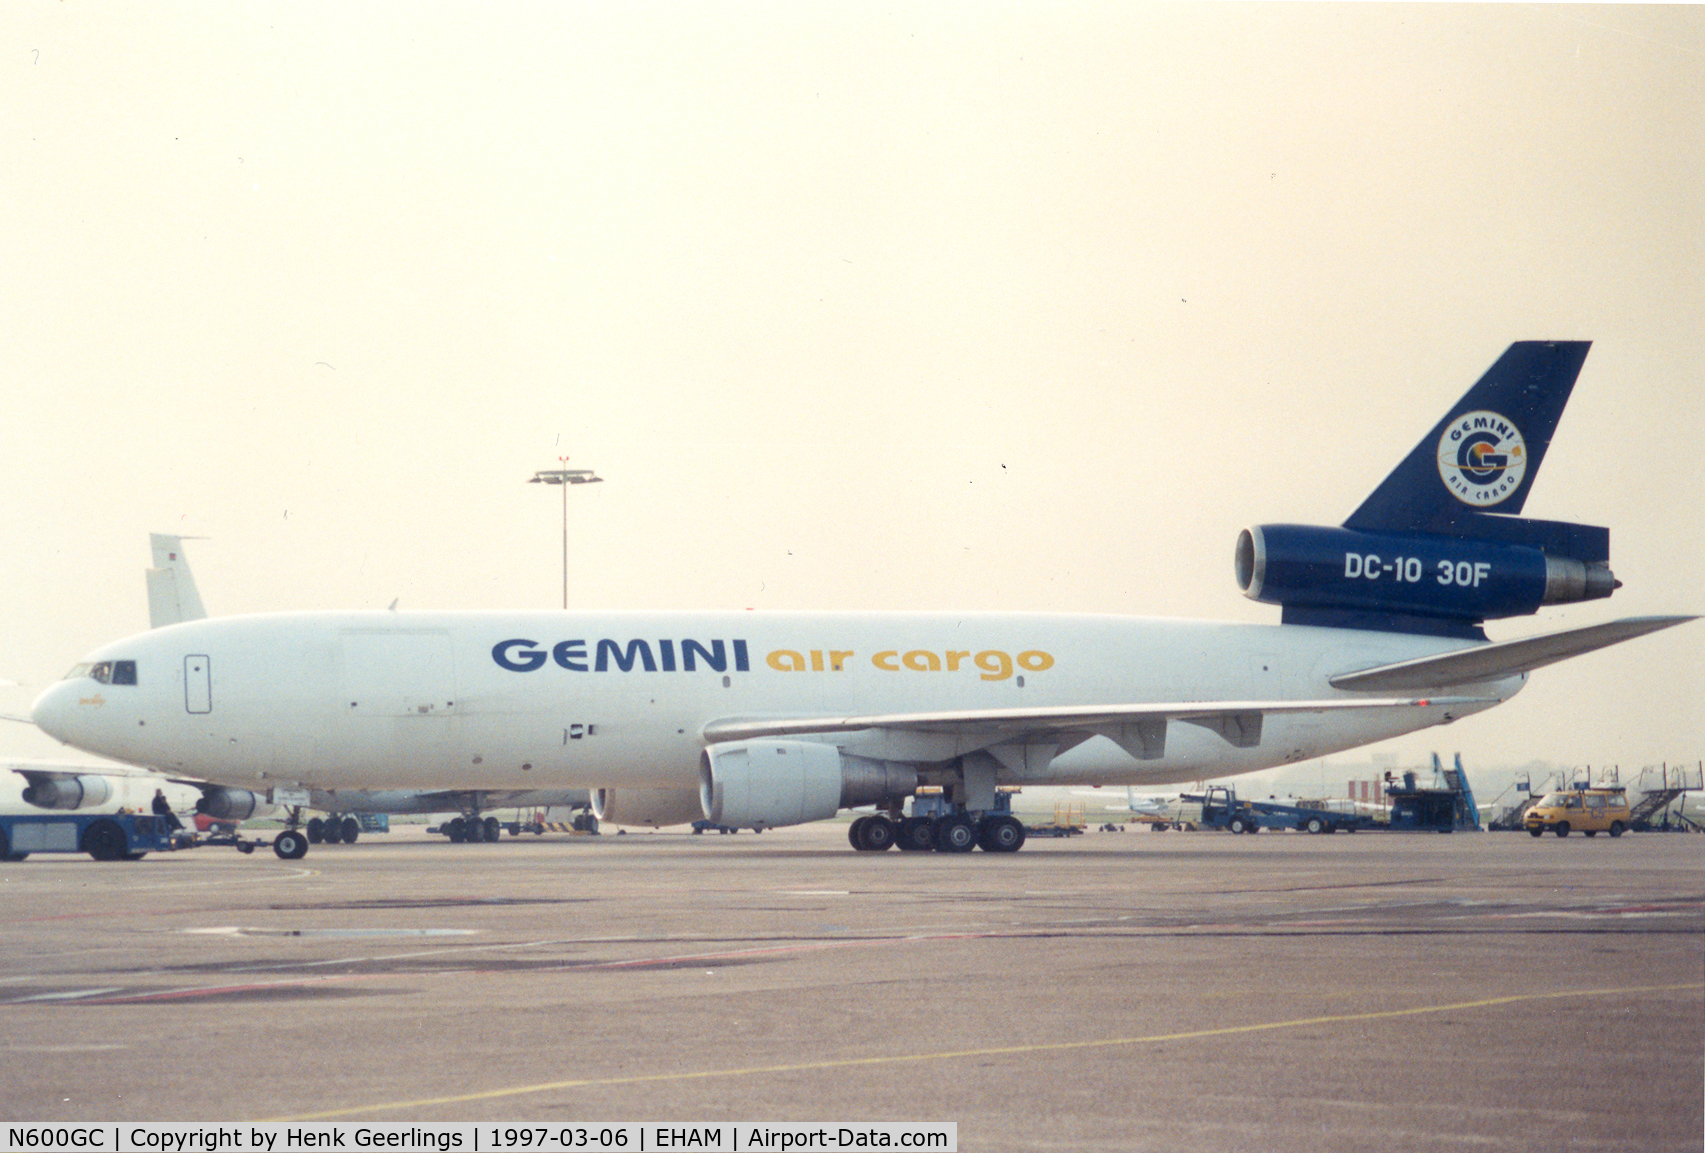 N600GC, 1977 McDonnell Douglas DC-10-30F C/N 46965, Gemini air cargo